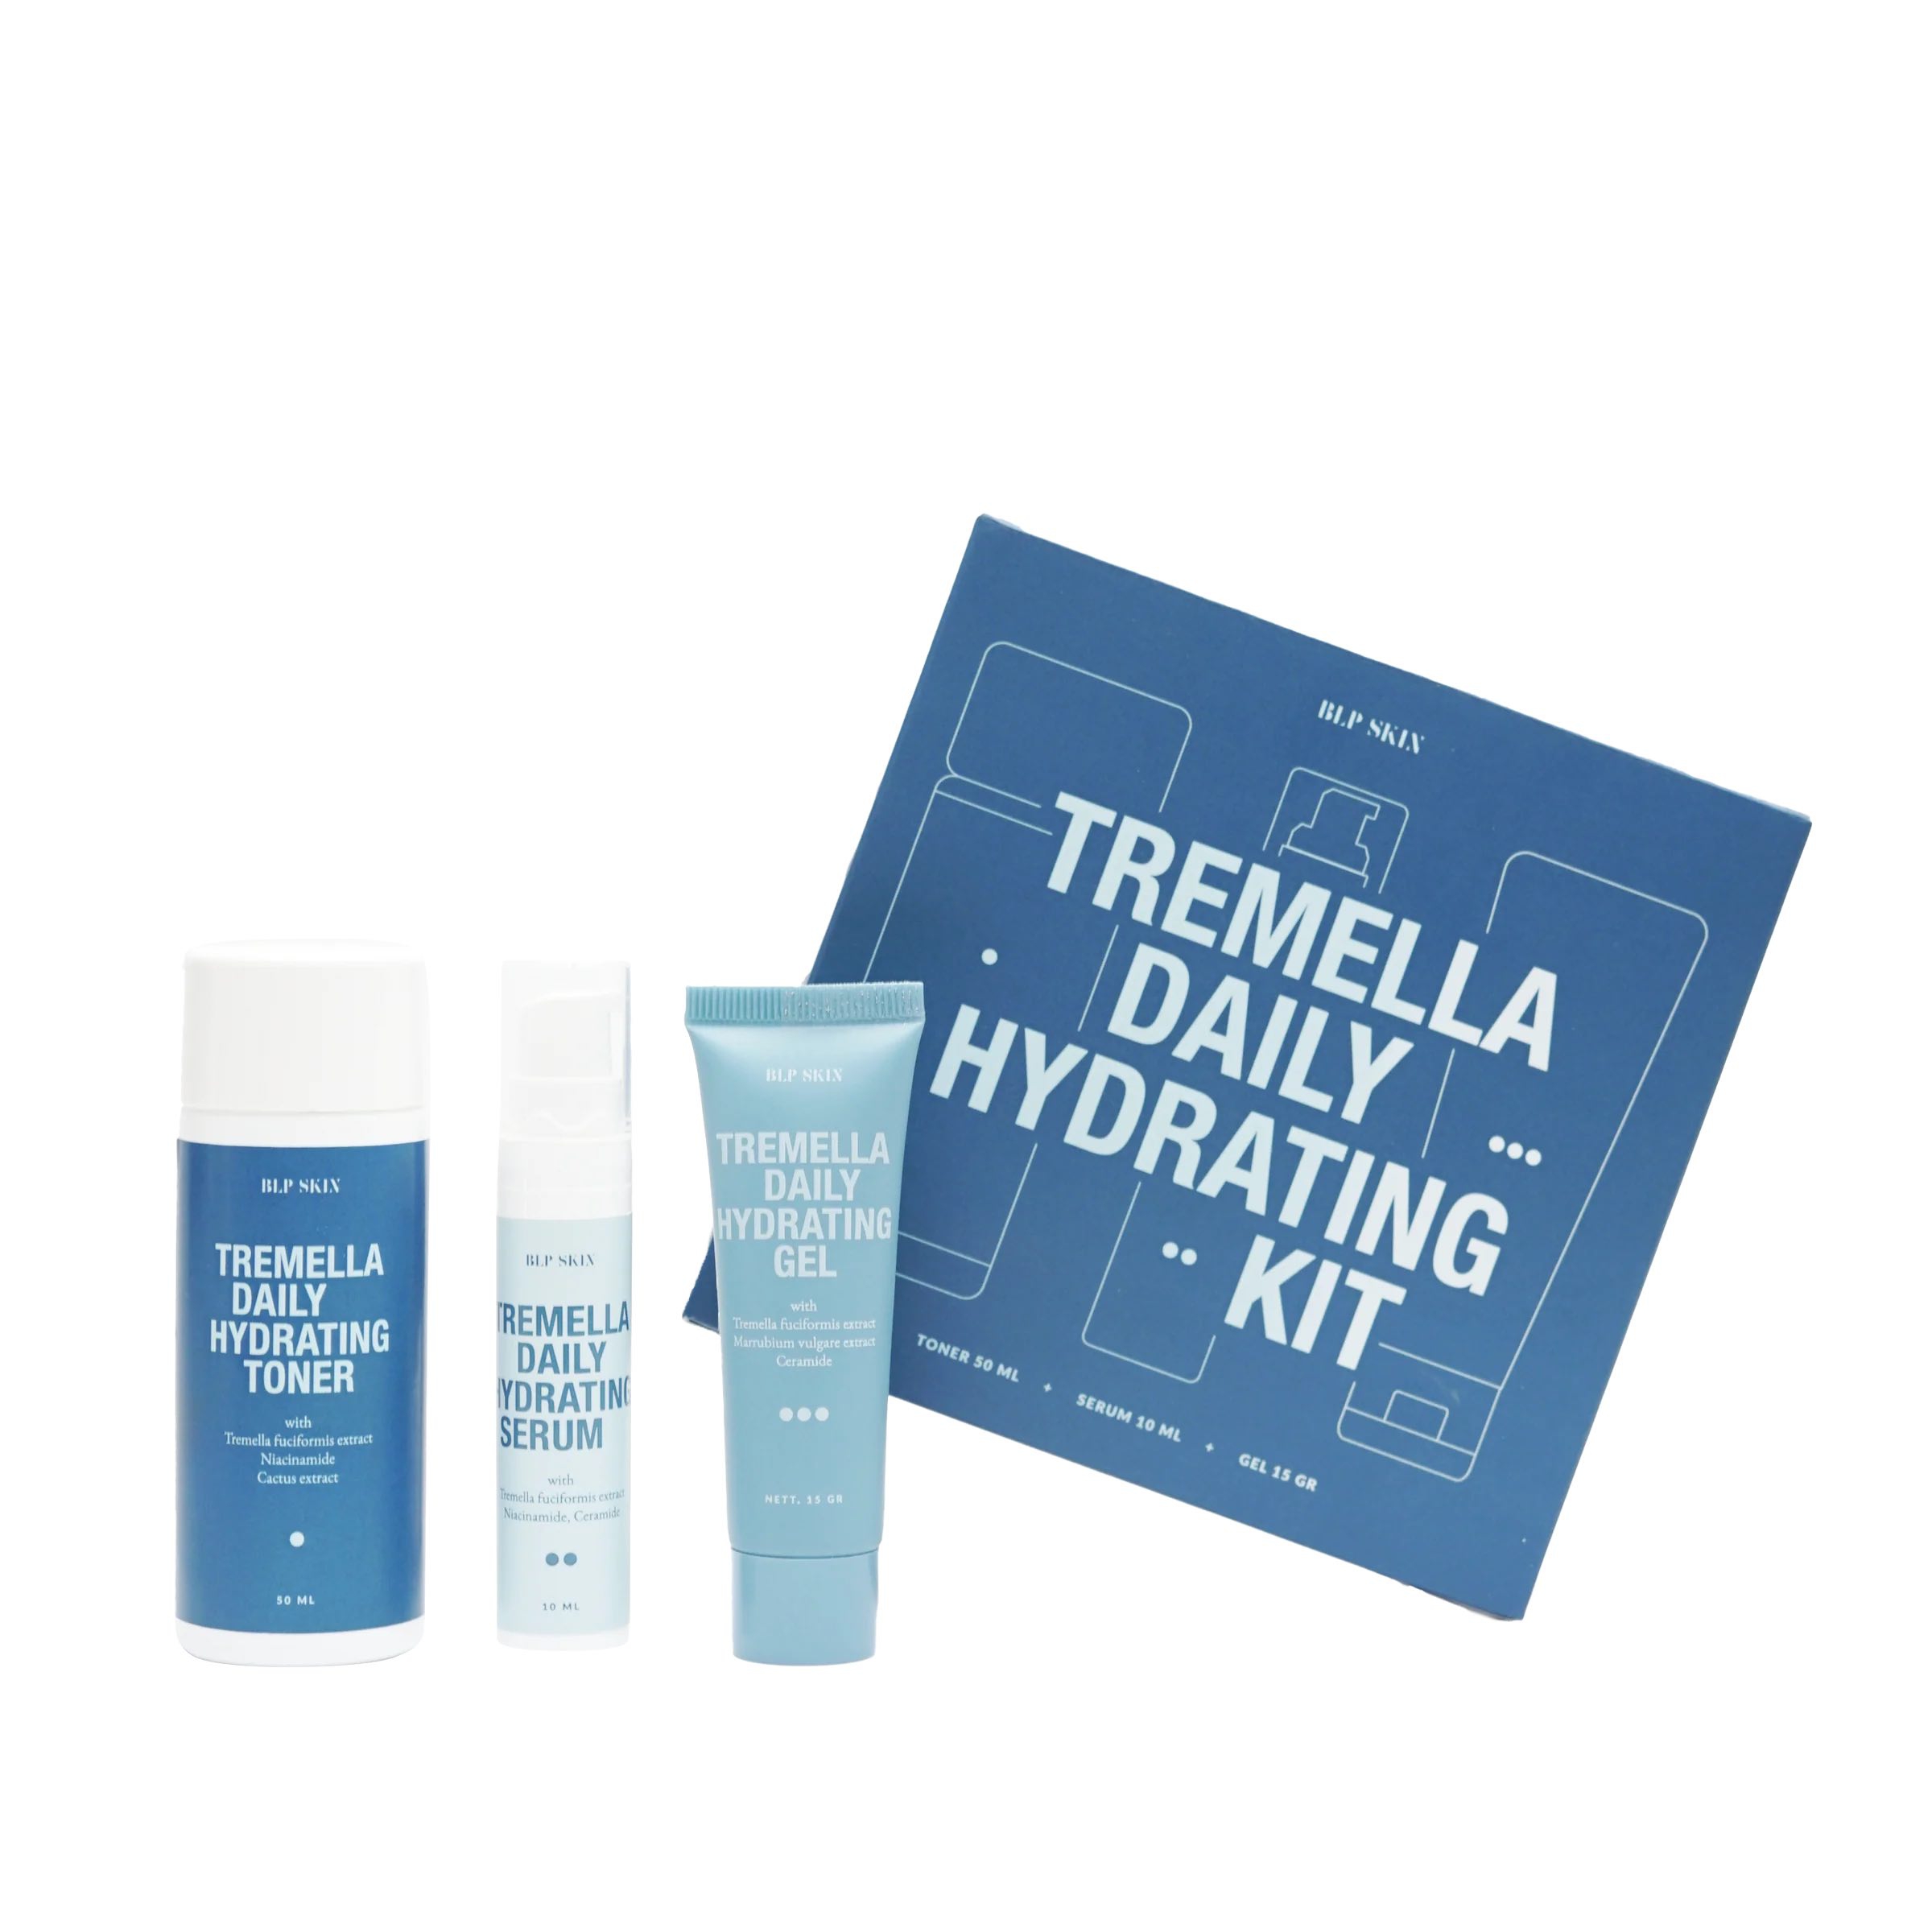 BLP Skin Tremella Daily Hydrating Kit produk beauty lokal yang travel friendly